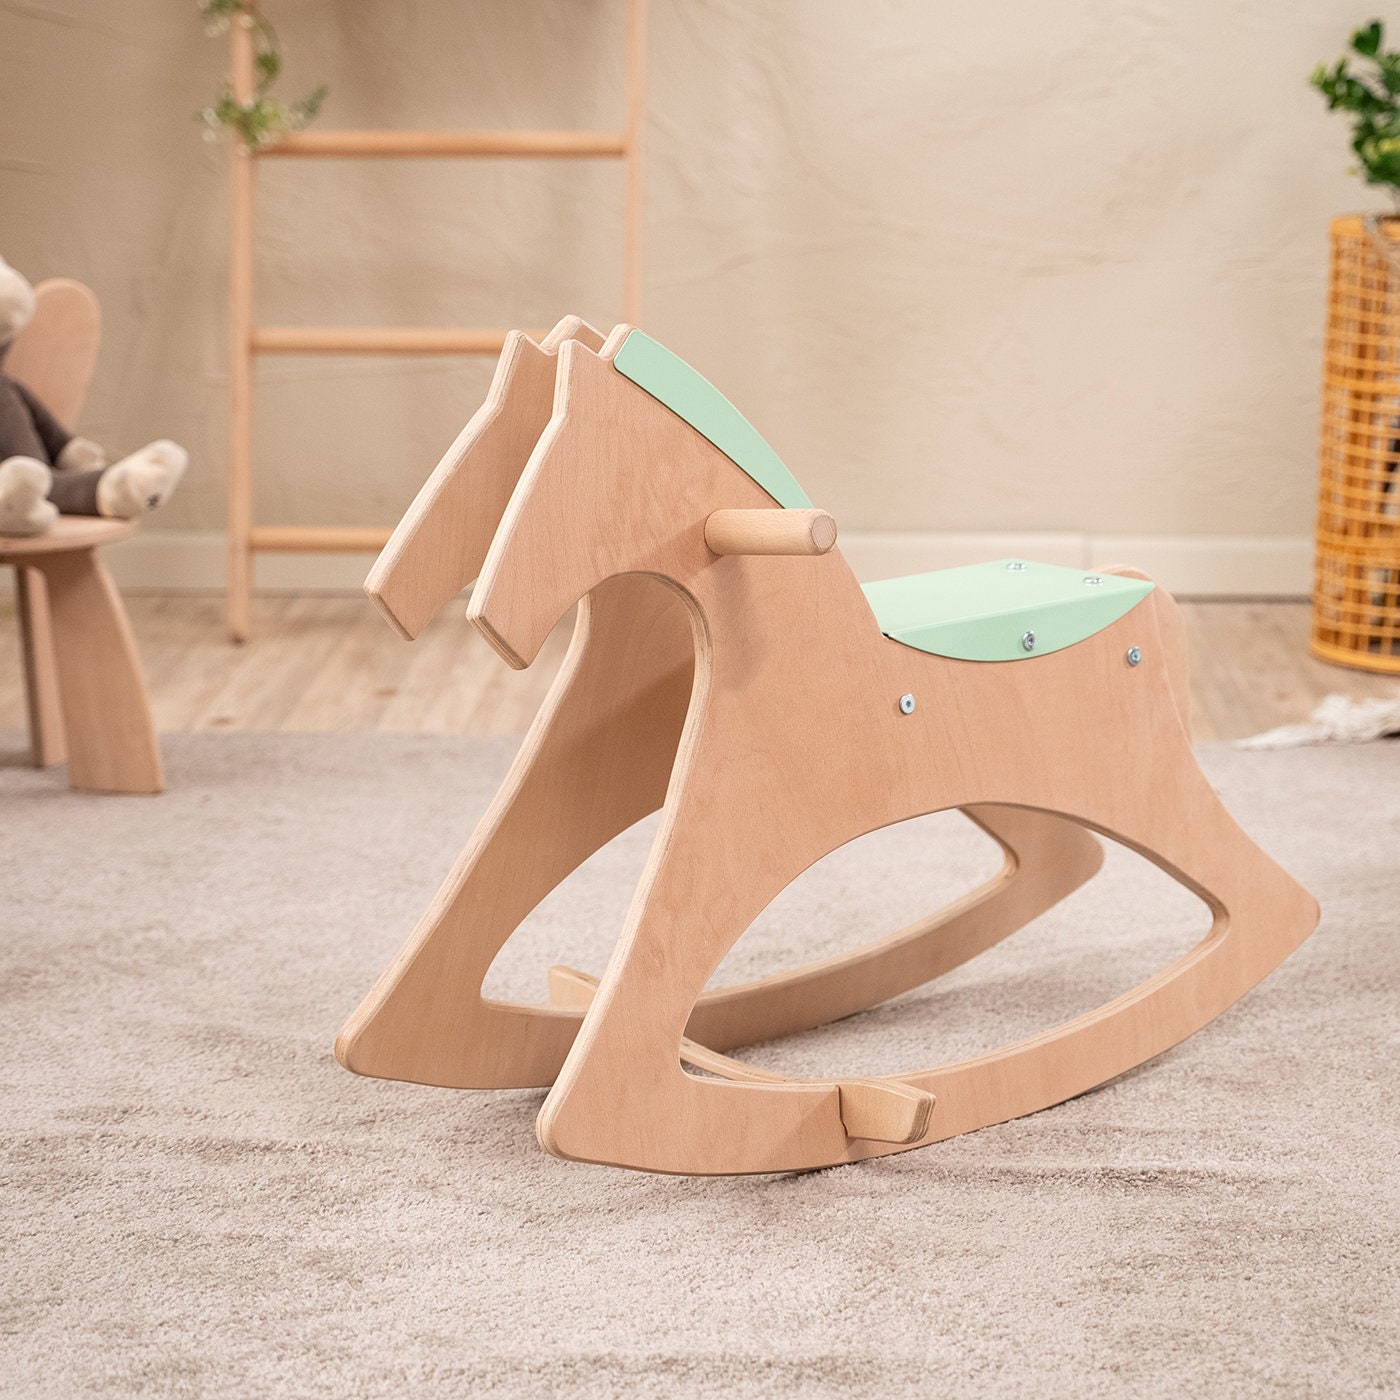 Rocking Horse Rocking Toy Montessori Rocker– Wooden Rocking horse Gift for Little Kids ROCKY Wooden Horse Toddler Rocker